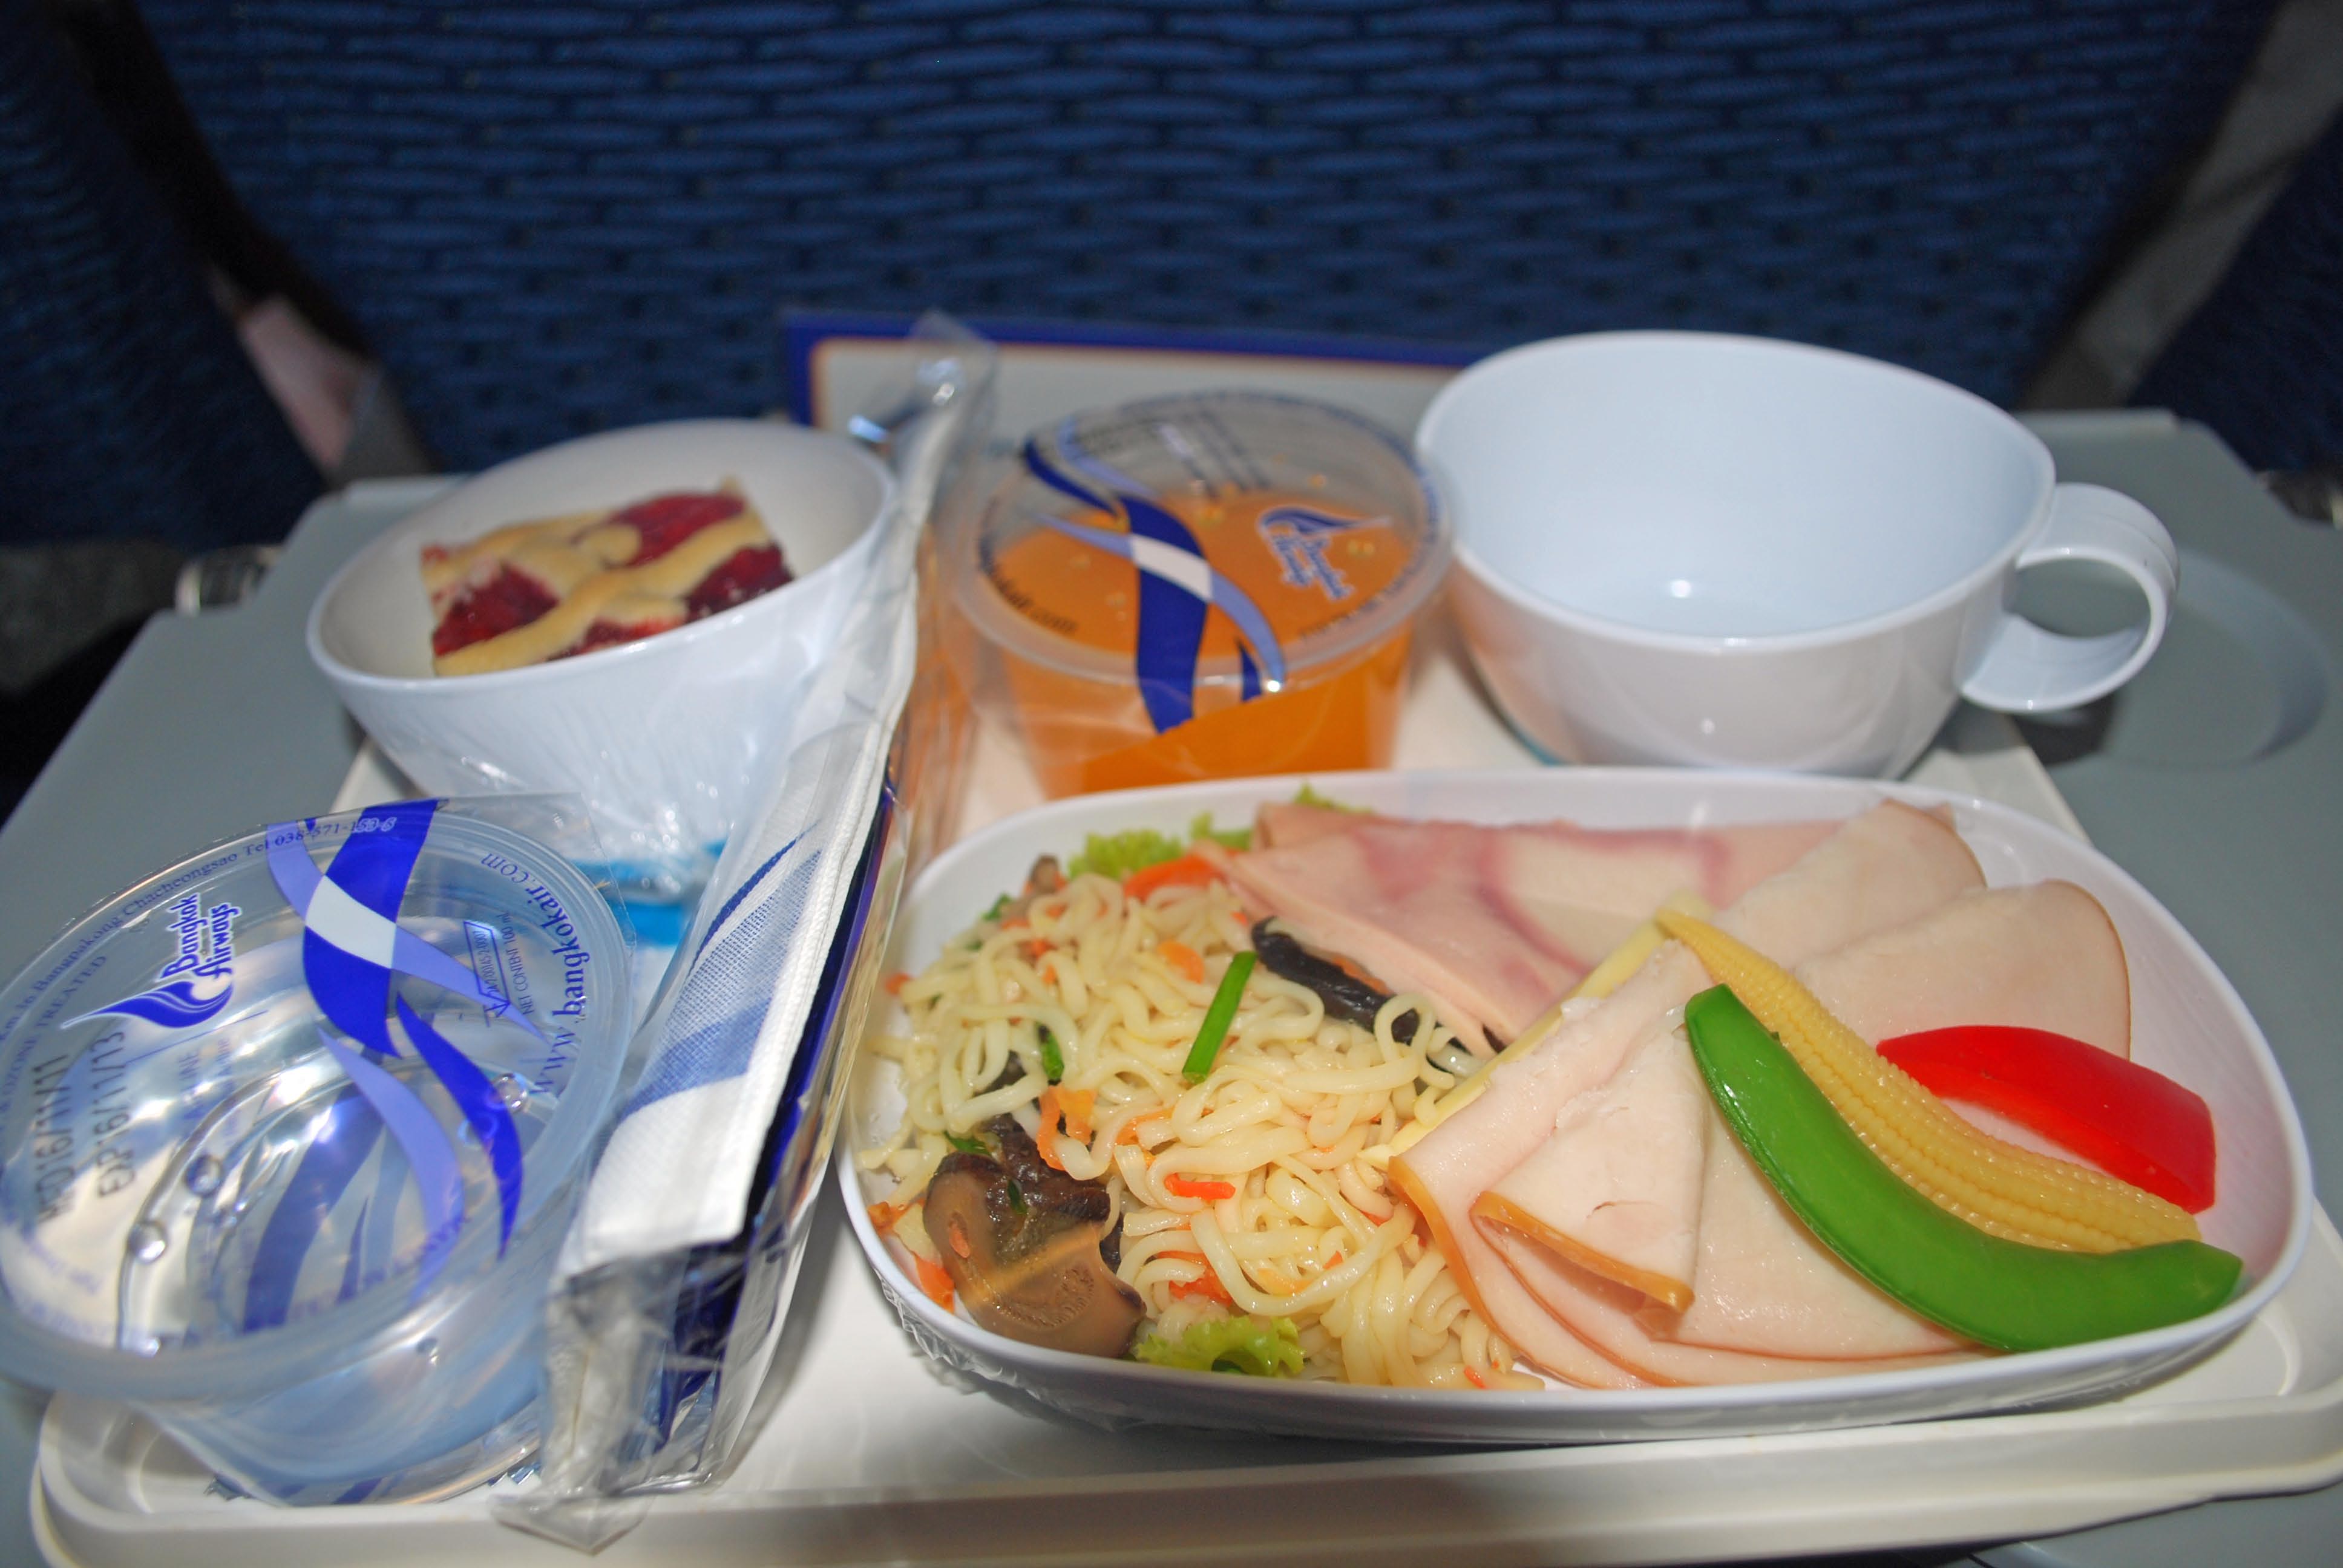 Bangkok Air delicious inflight meal